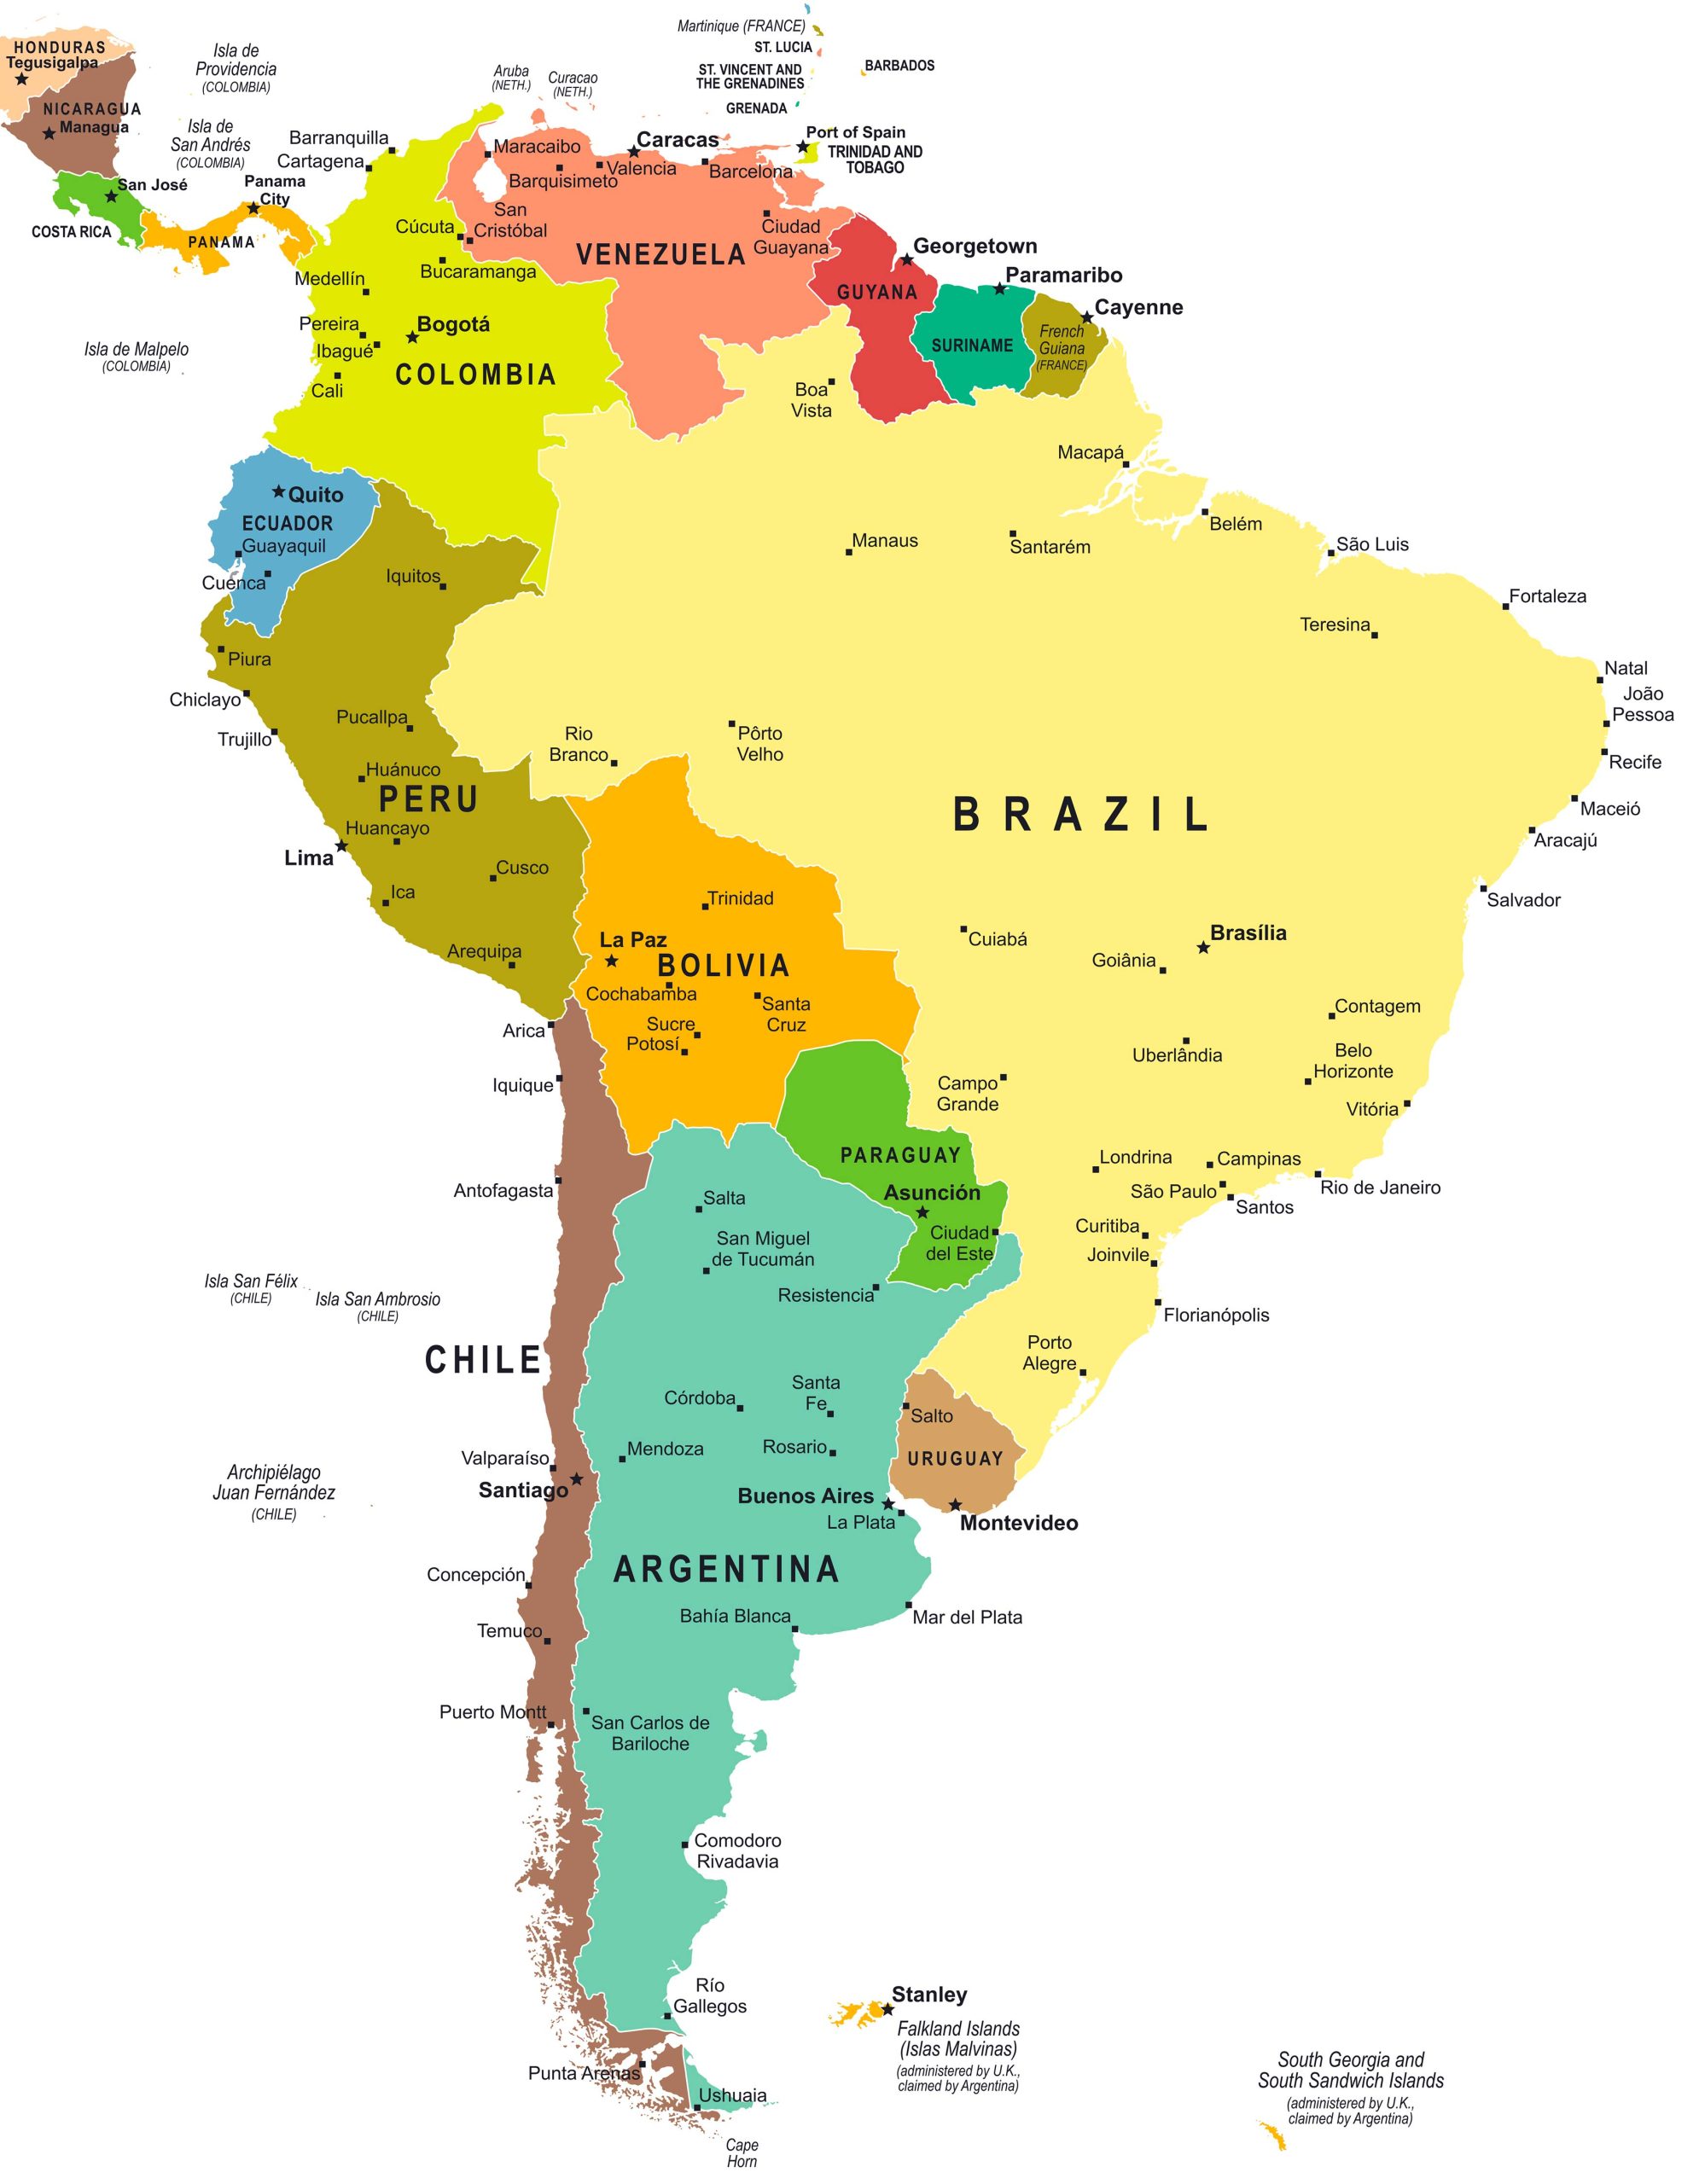 South America Political Map